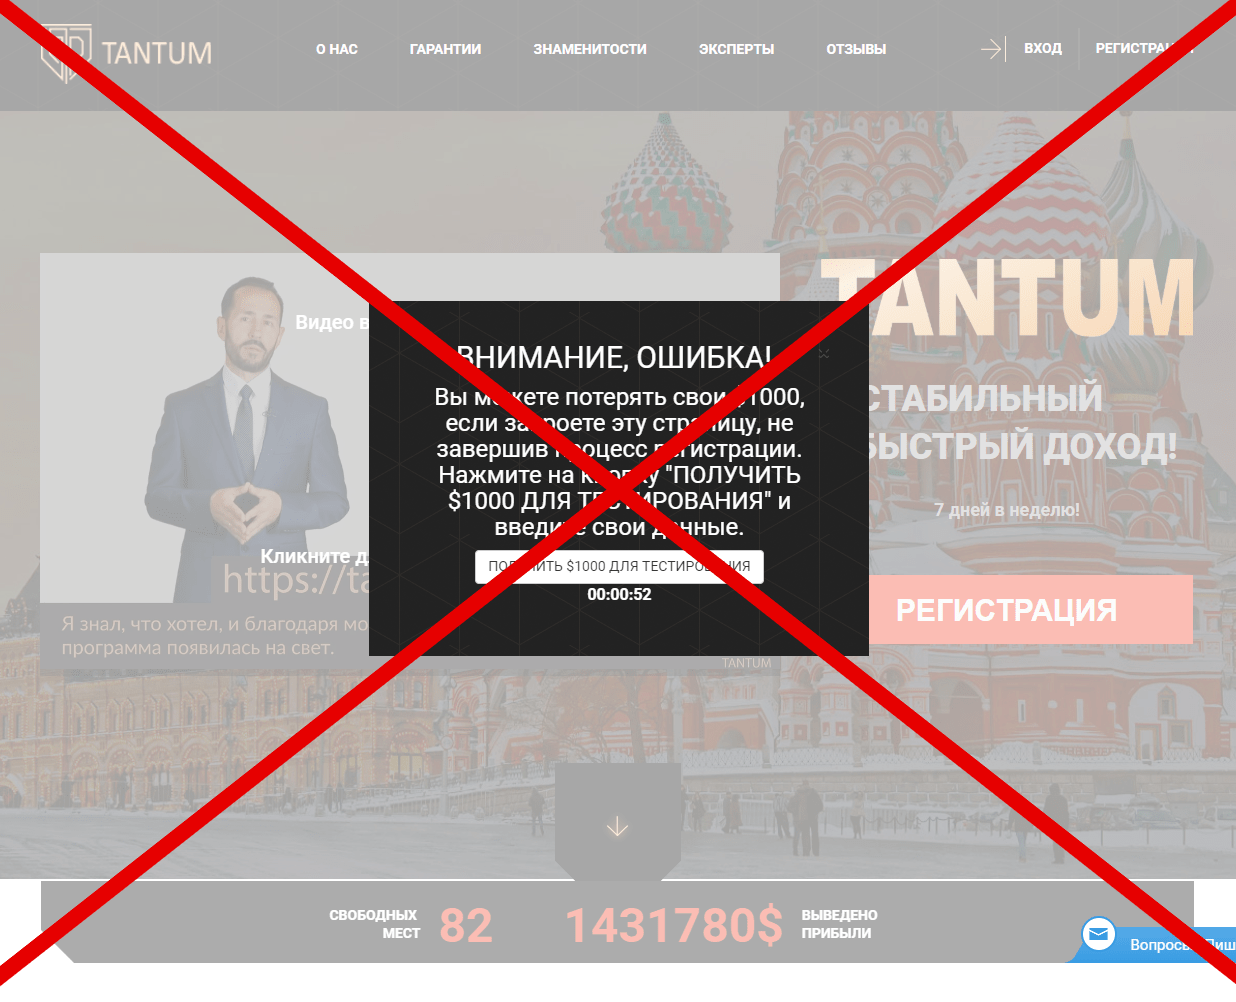 Tantum - отзывы и обзор tantum2019.ru